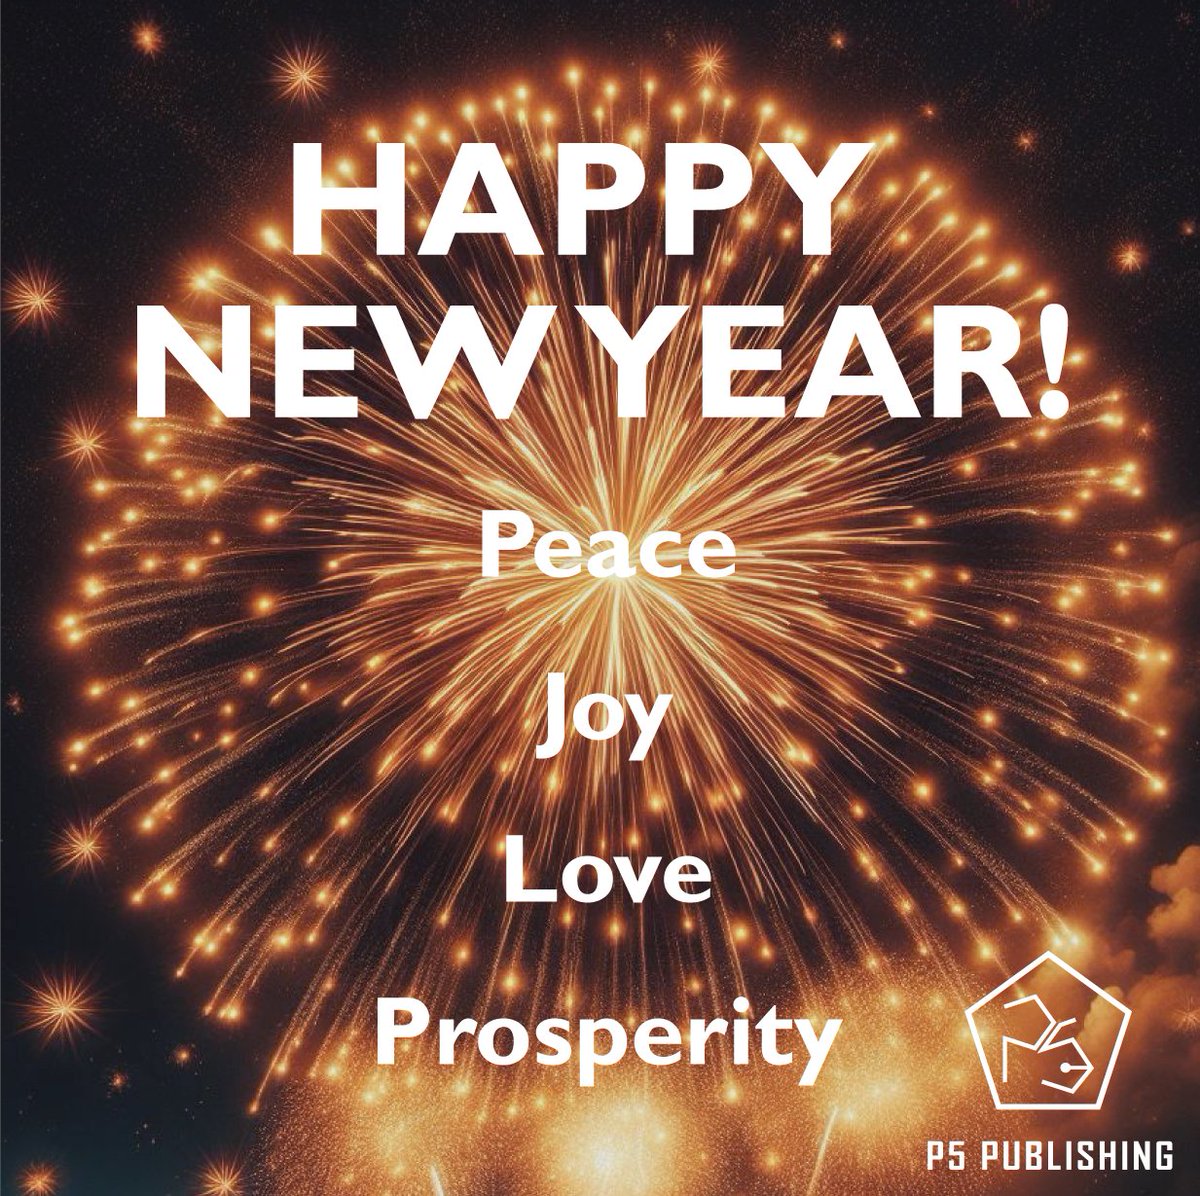 Happy Hew Year!  
Wishing you peace, joy, love & prosperity. 

#p5publishing #happynewyear2024 #happynewyear #peace #joy #love #prosperity #prosperitymindset #positivitymindset #writers #readers #business